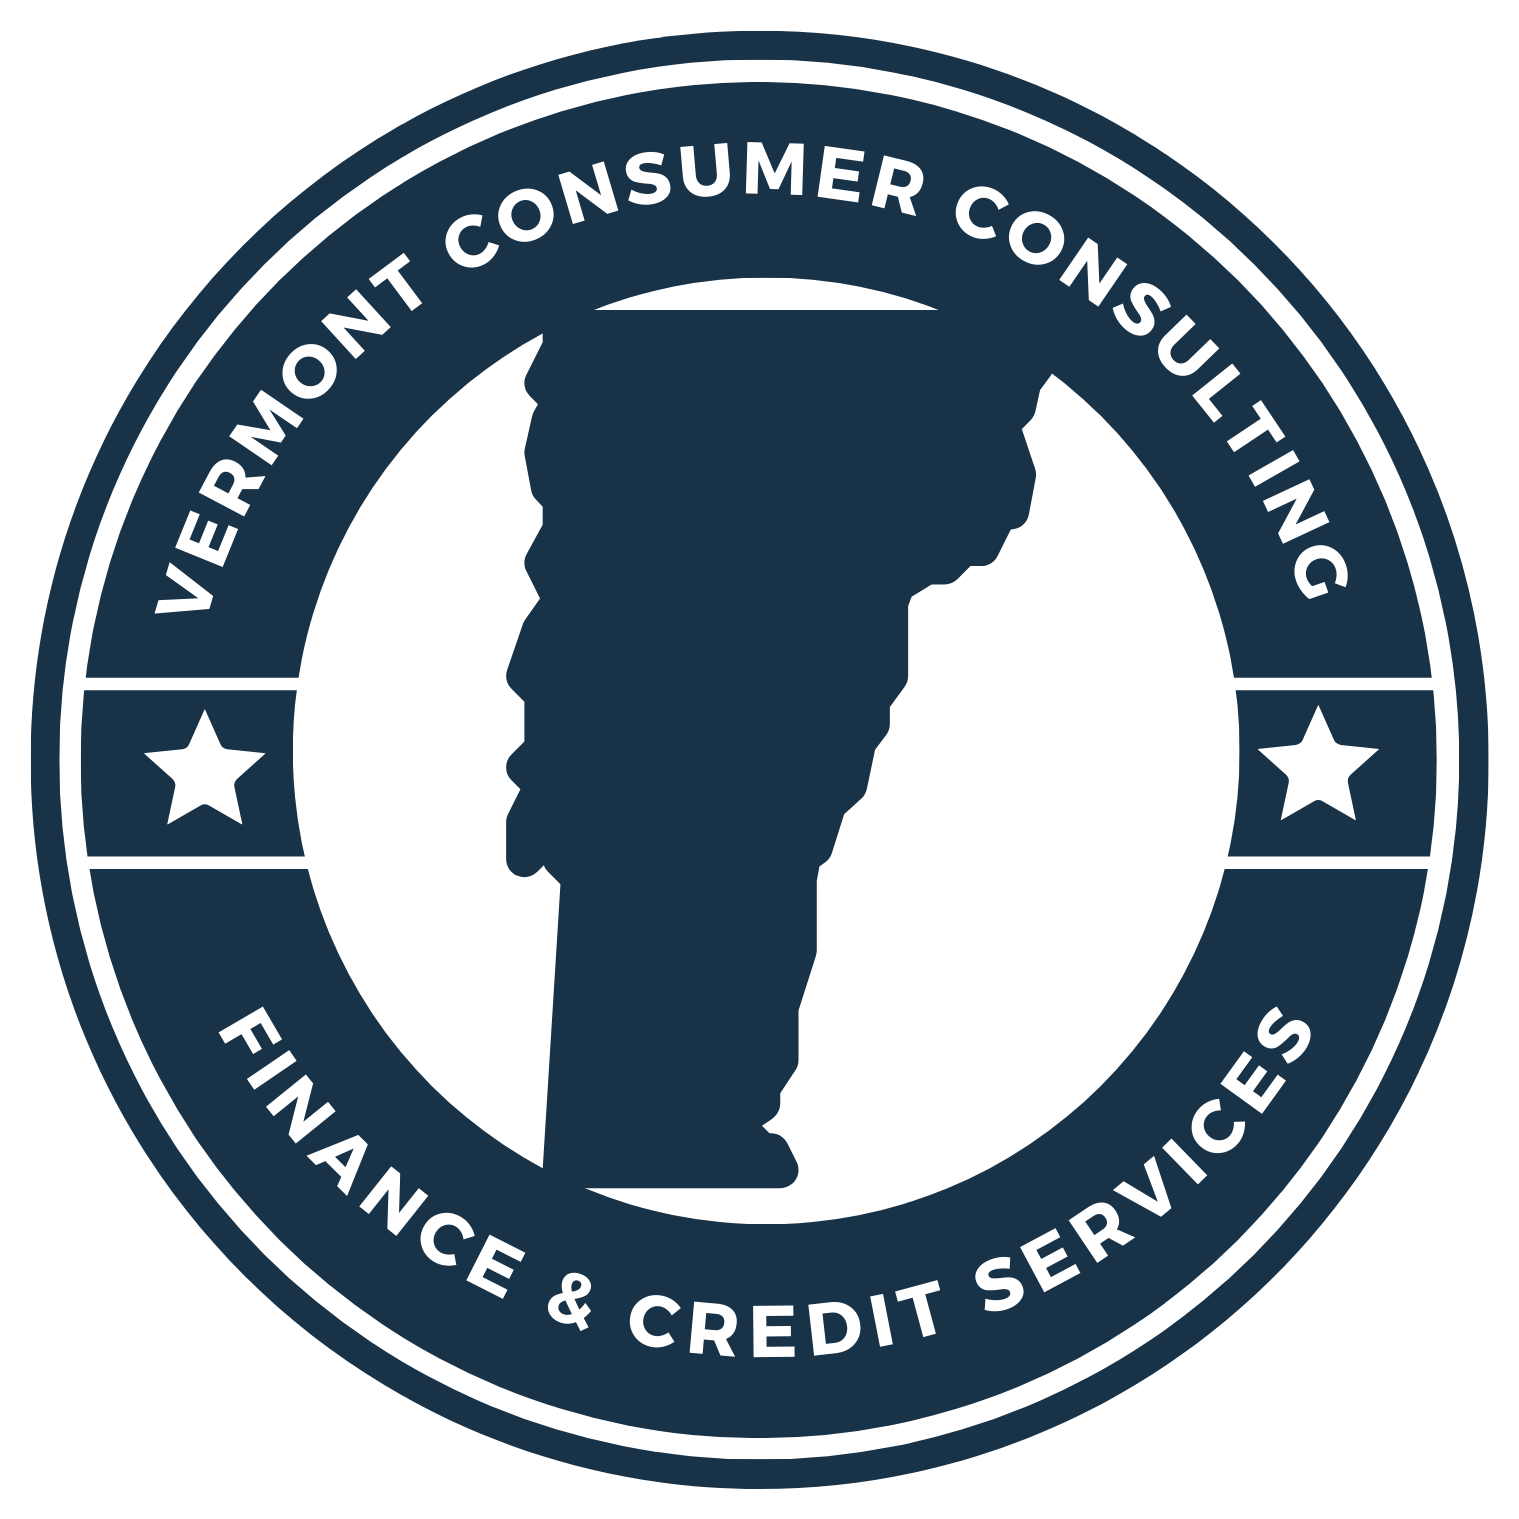 Vermont Consumer Credit